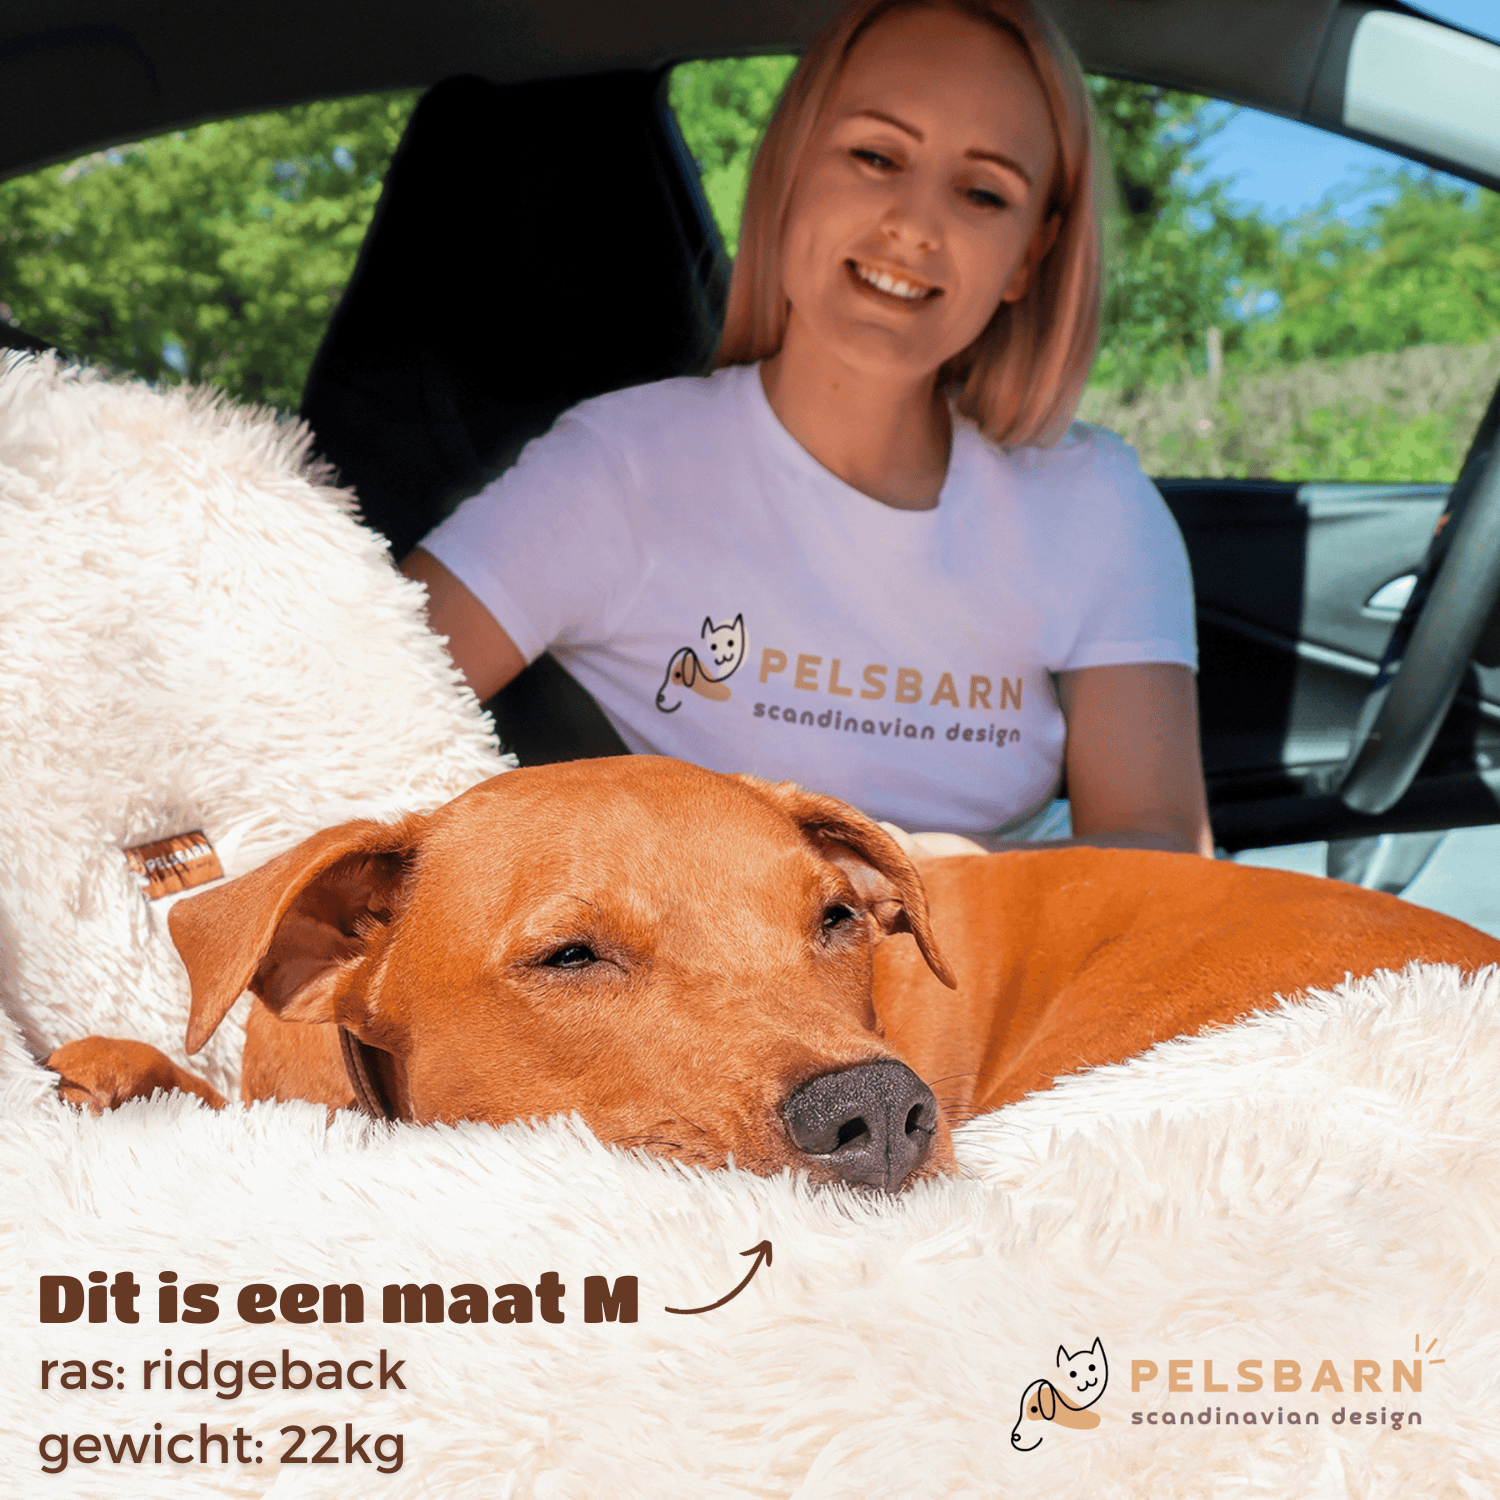 Pelsbarn car dog bed (2-in-1)